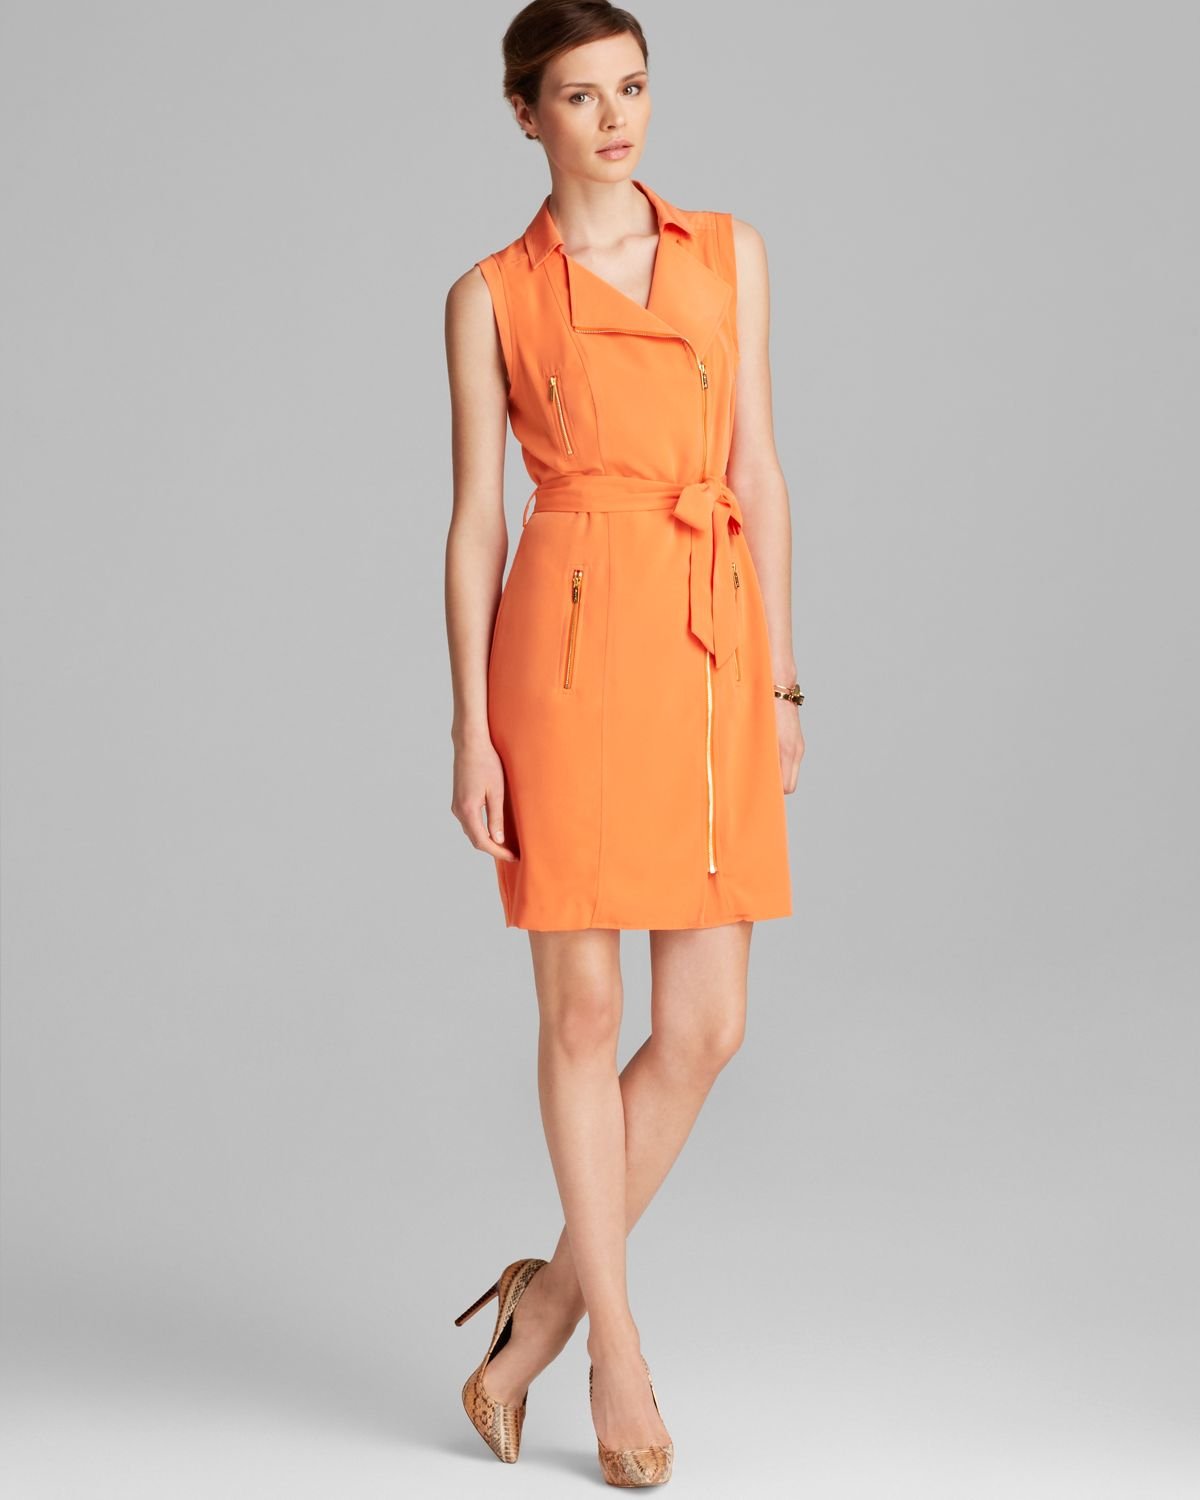 Lyst Calvin Klein Moto Zip Dress in Orange